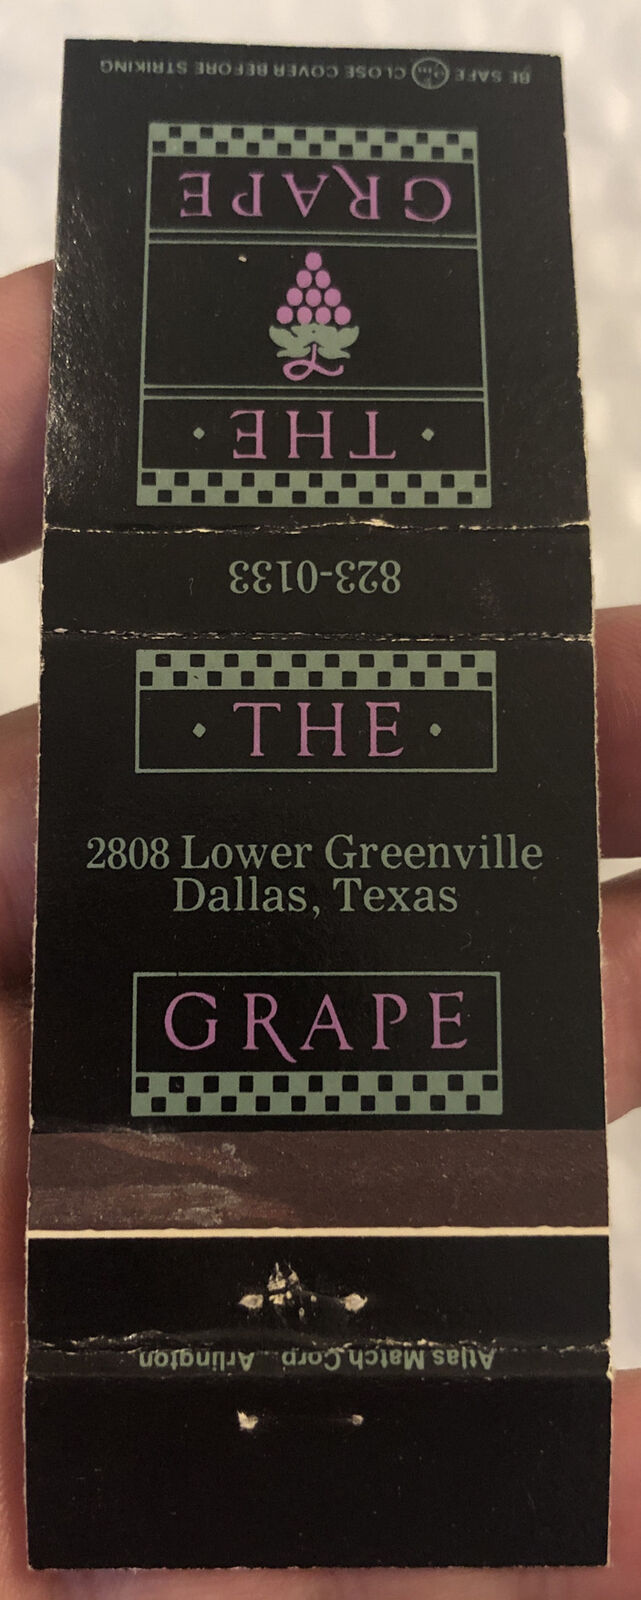 Vintage 20 Strike Matchbook Cover - The Grape Dallas, TX